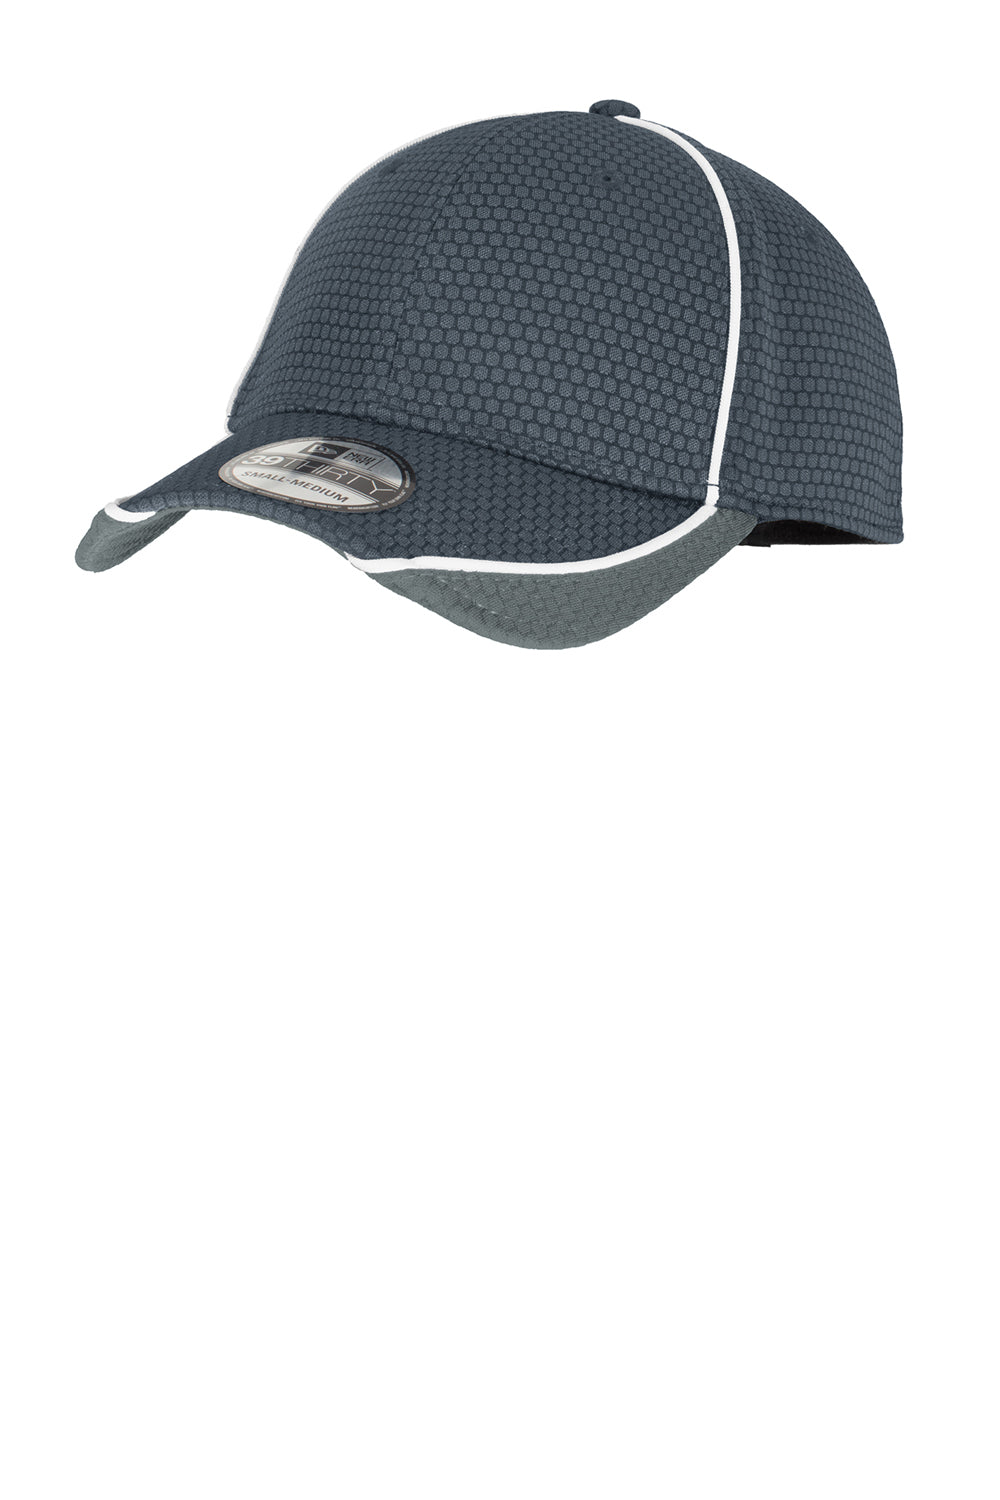 New Era NE1070 Mens Moisture Wicking Stretch Fit Hat Navy Blue/Graphite Grey/White Front